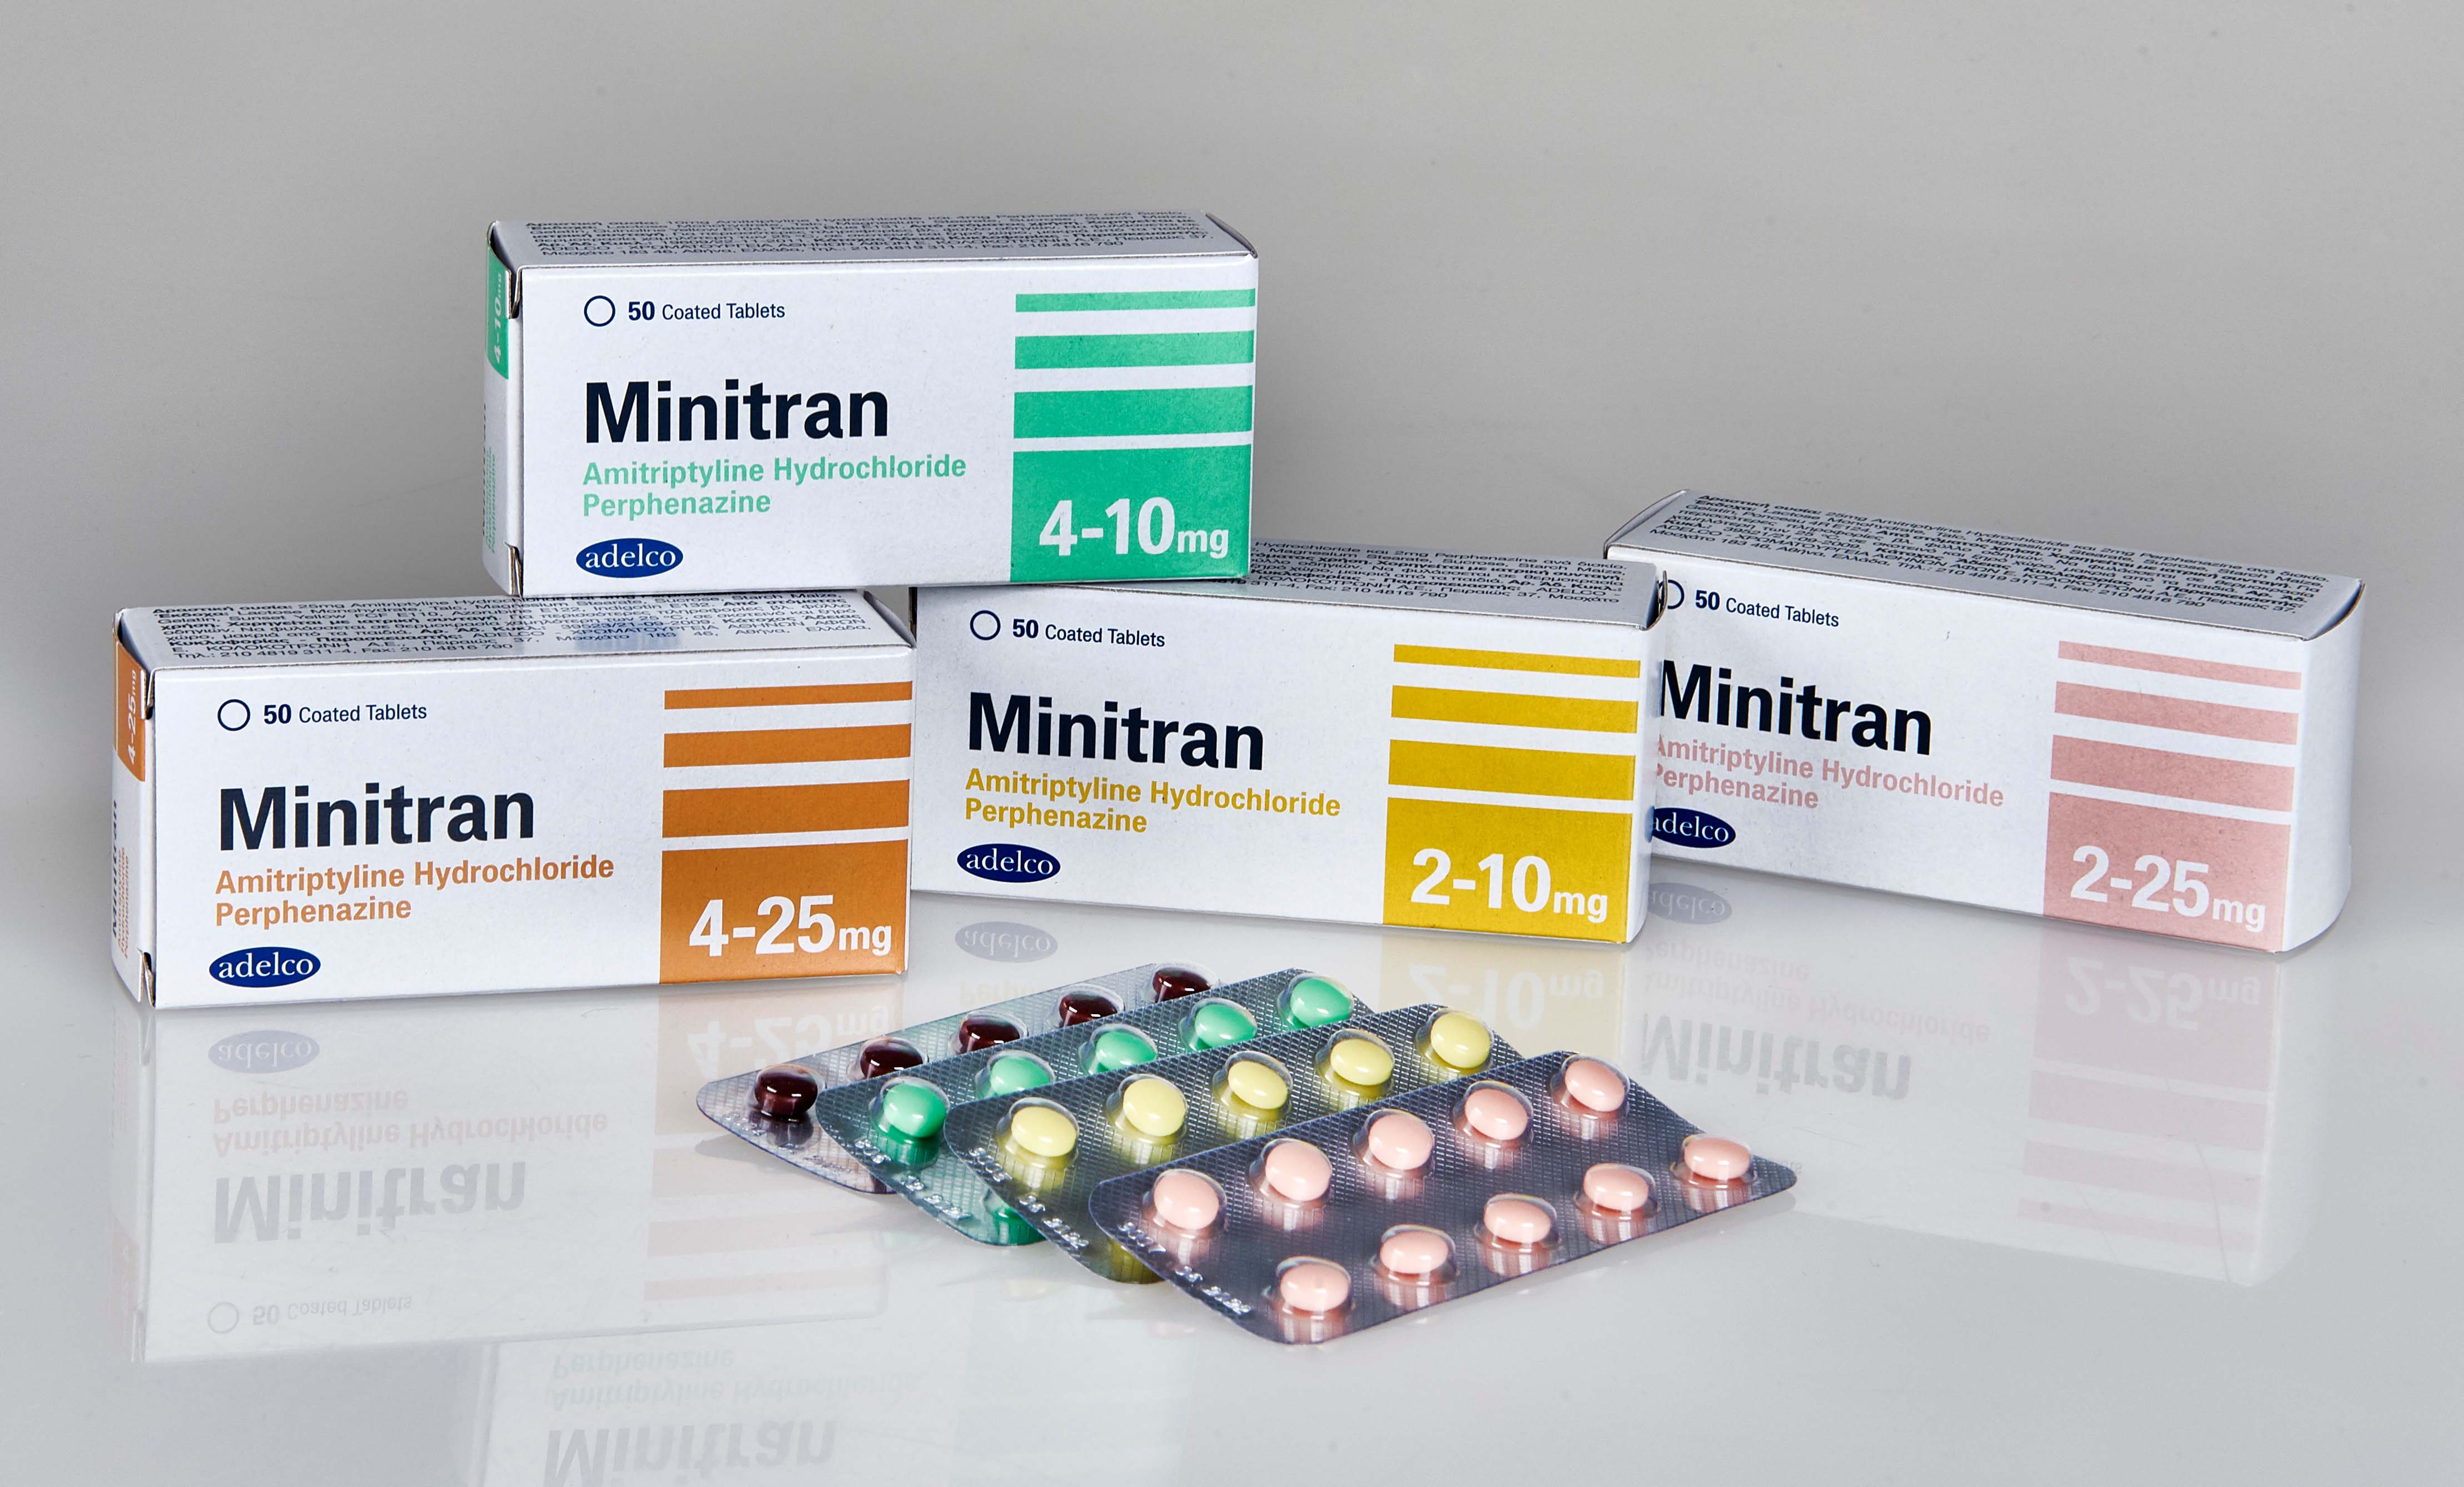 Minitran tablets